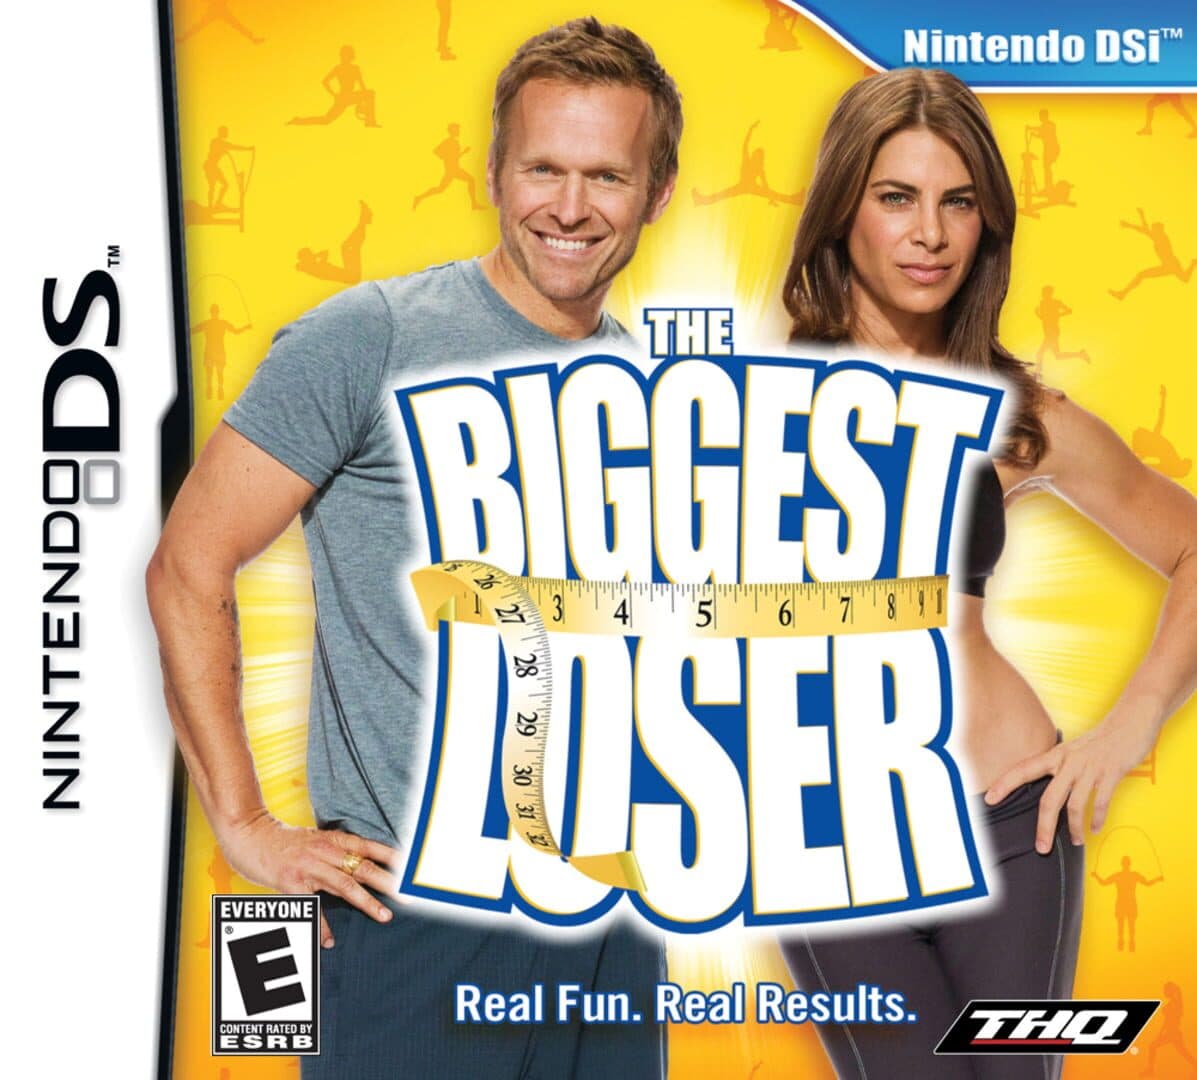 The Biggest Loser cover art